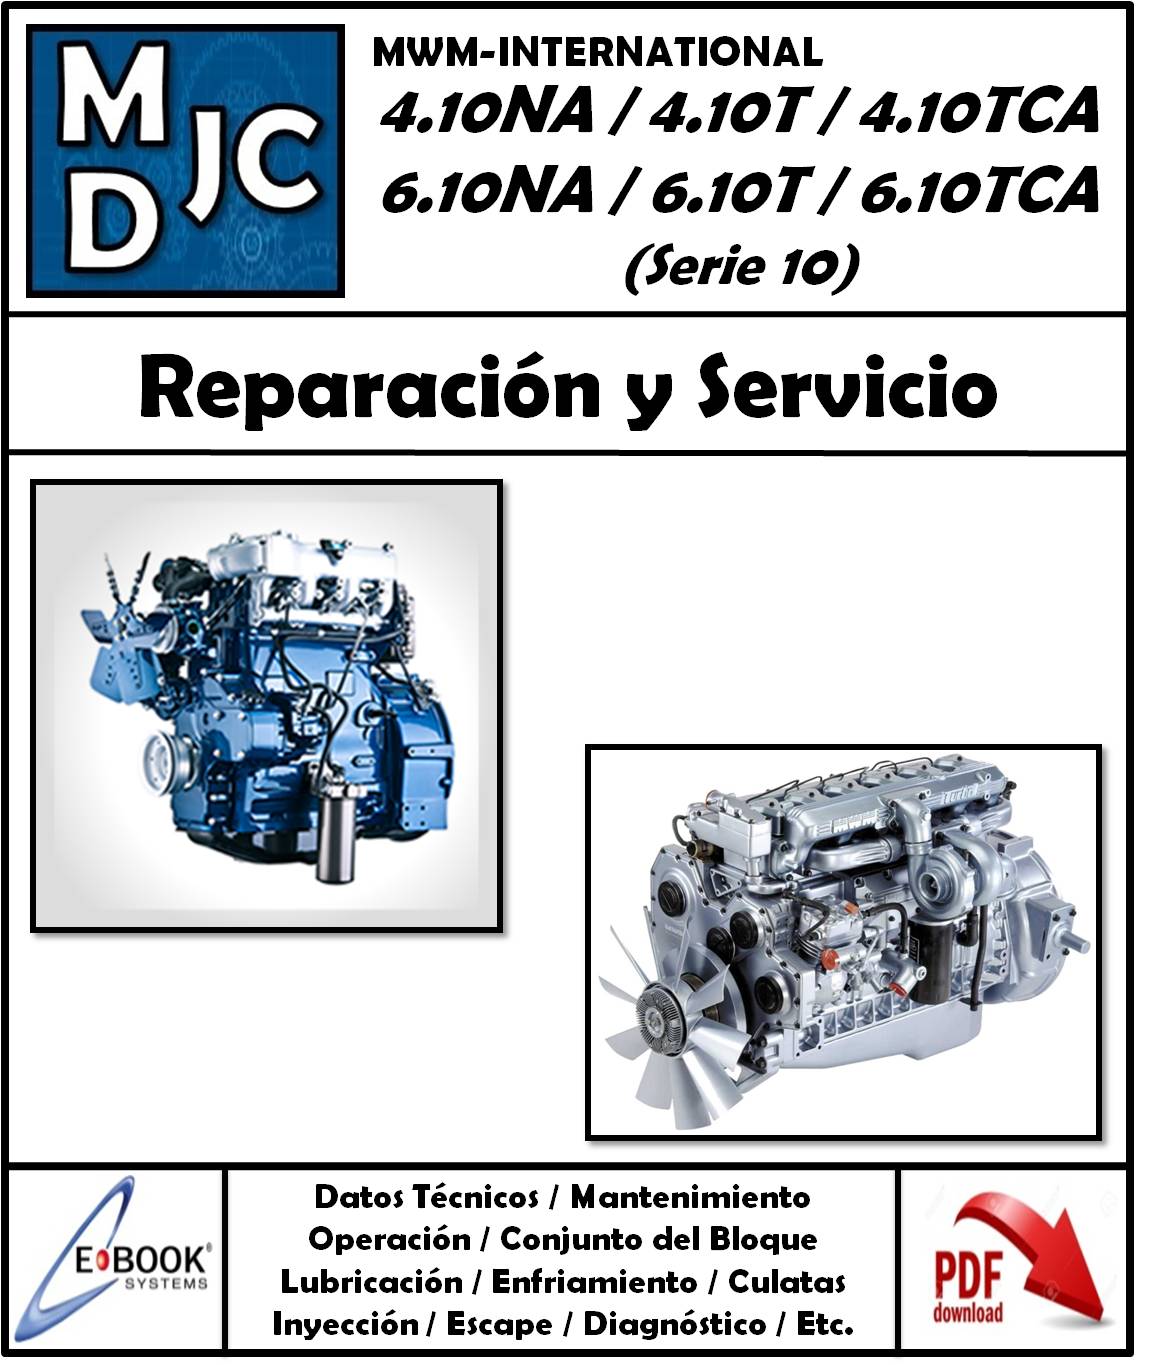 Manual de Taller Motor International MWM 4.10NA / 4.10T / 4.10TCA / 6.10NA / 6.10T / 6.10TCA / Serie